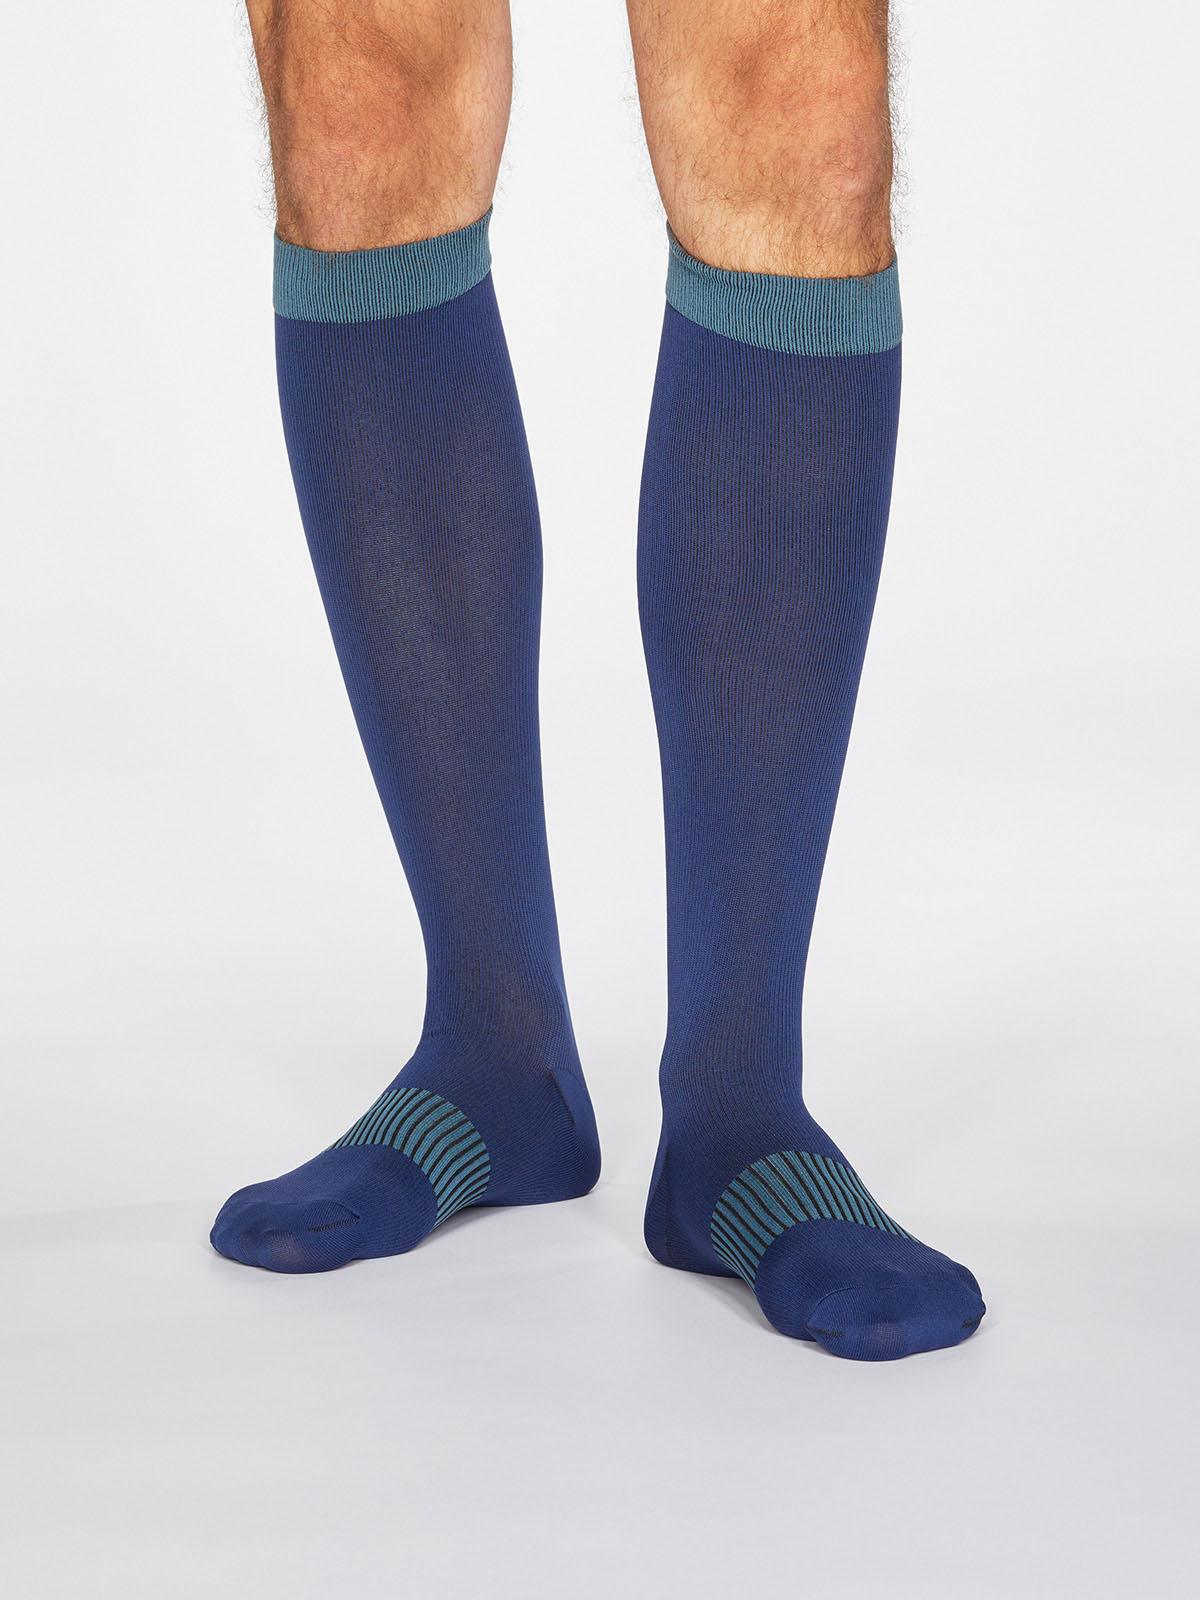 Declan Flight Socks - Denim Blue - Thought Clothing UK